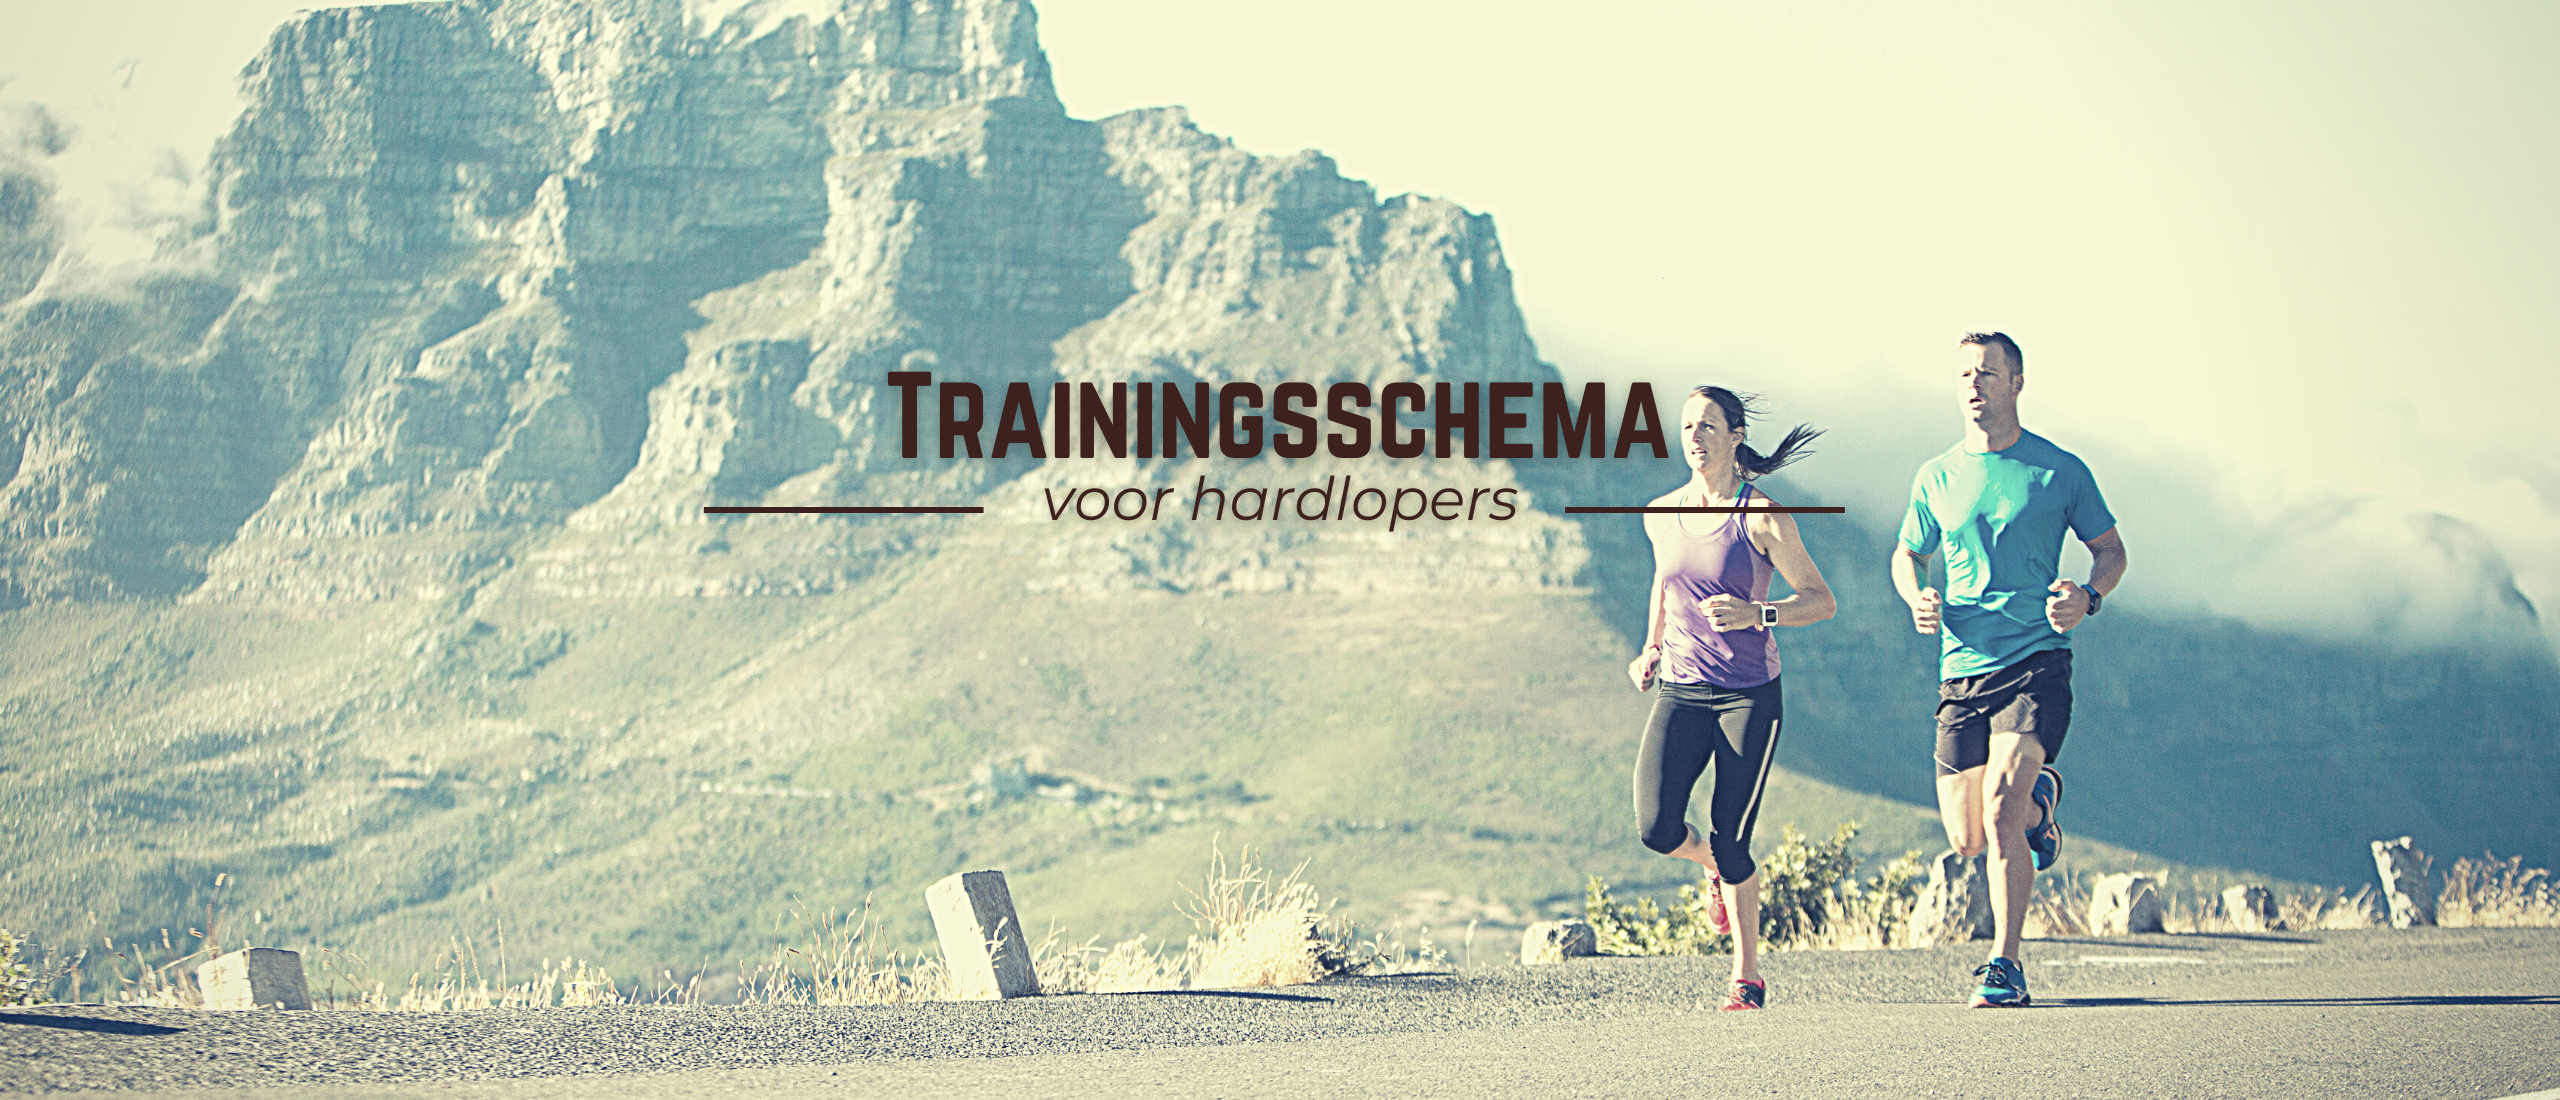 trainingsschema hardlopen